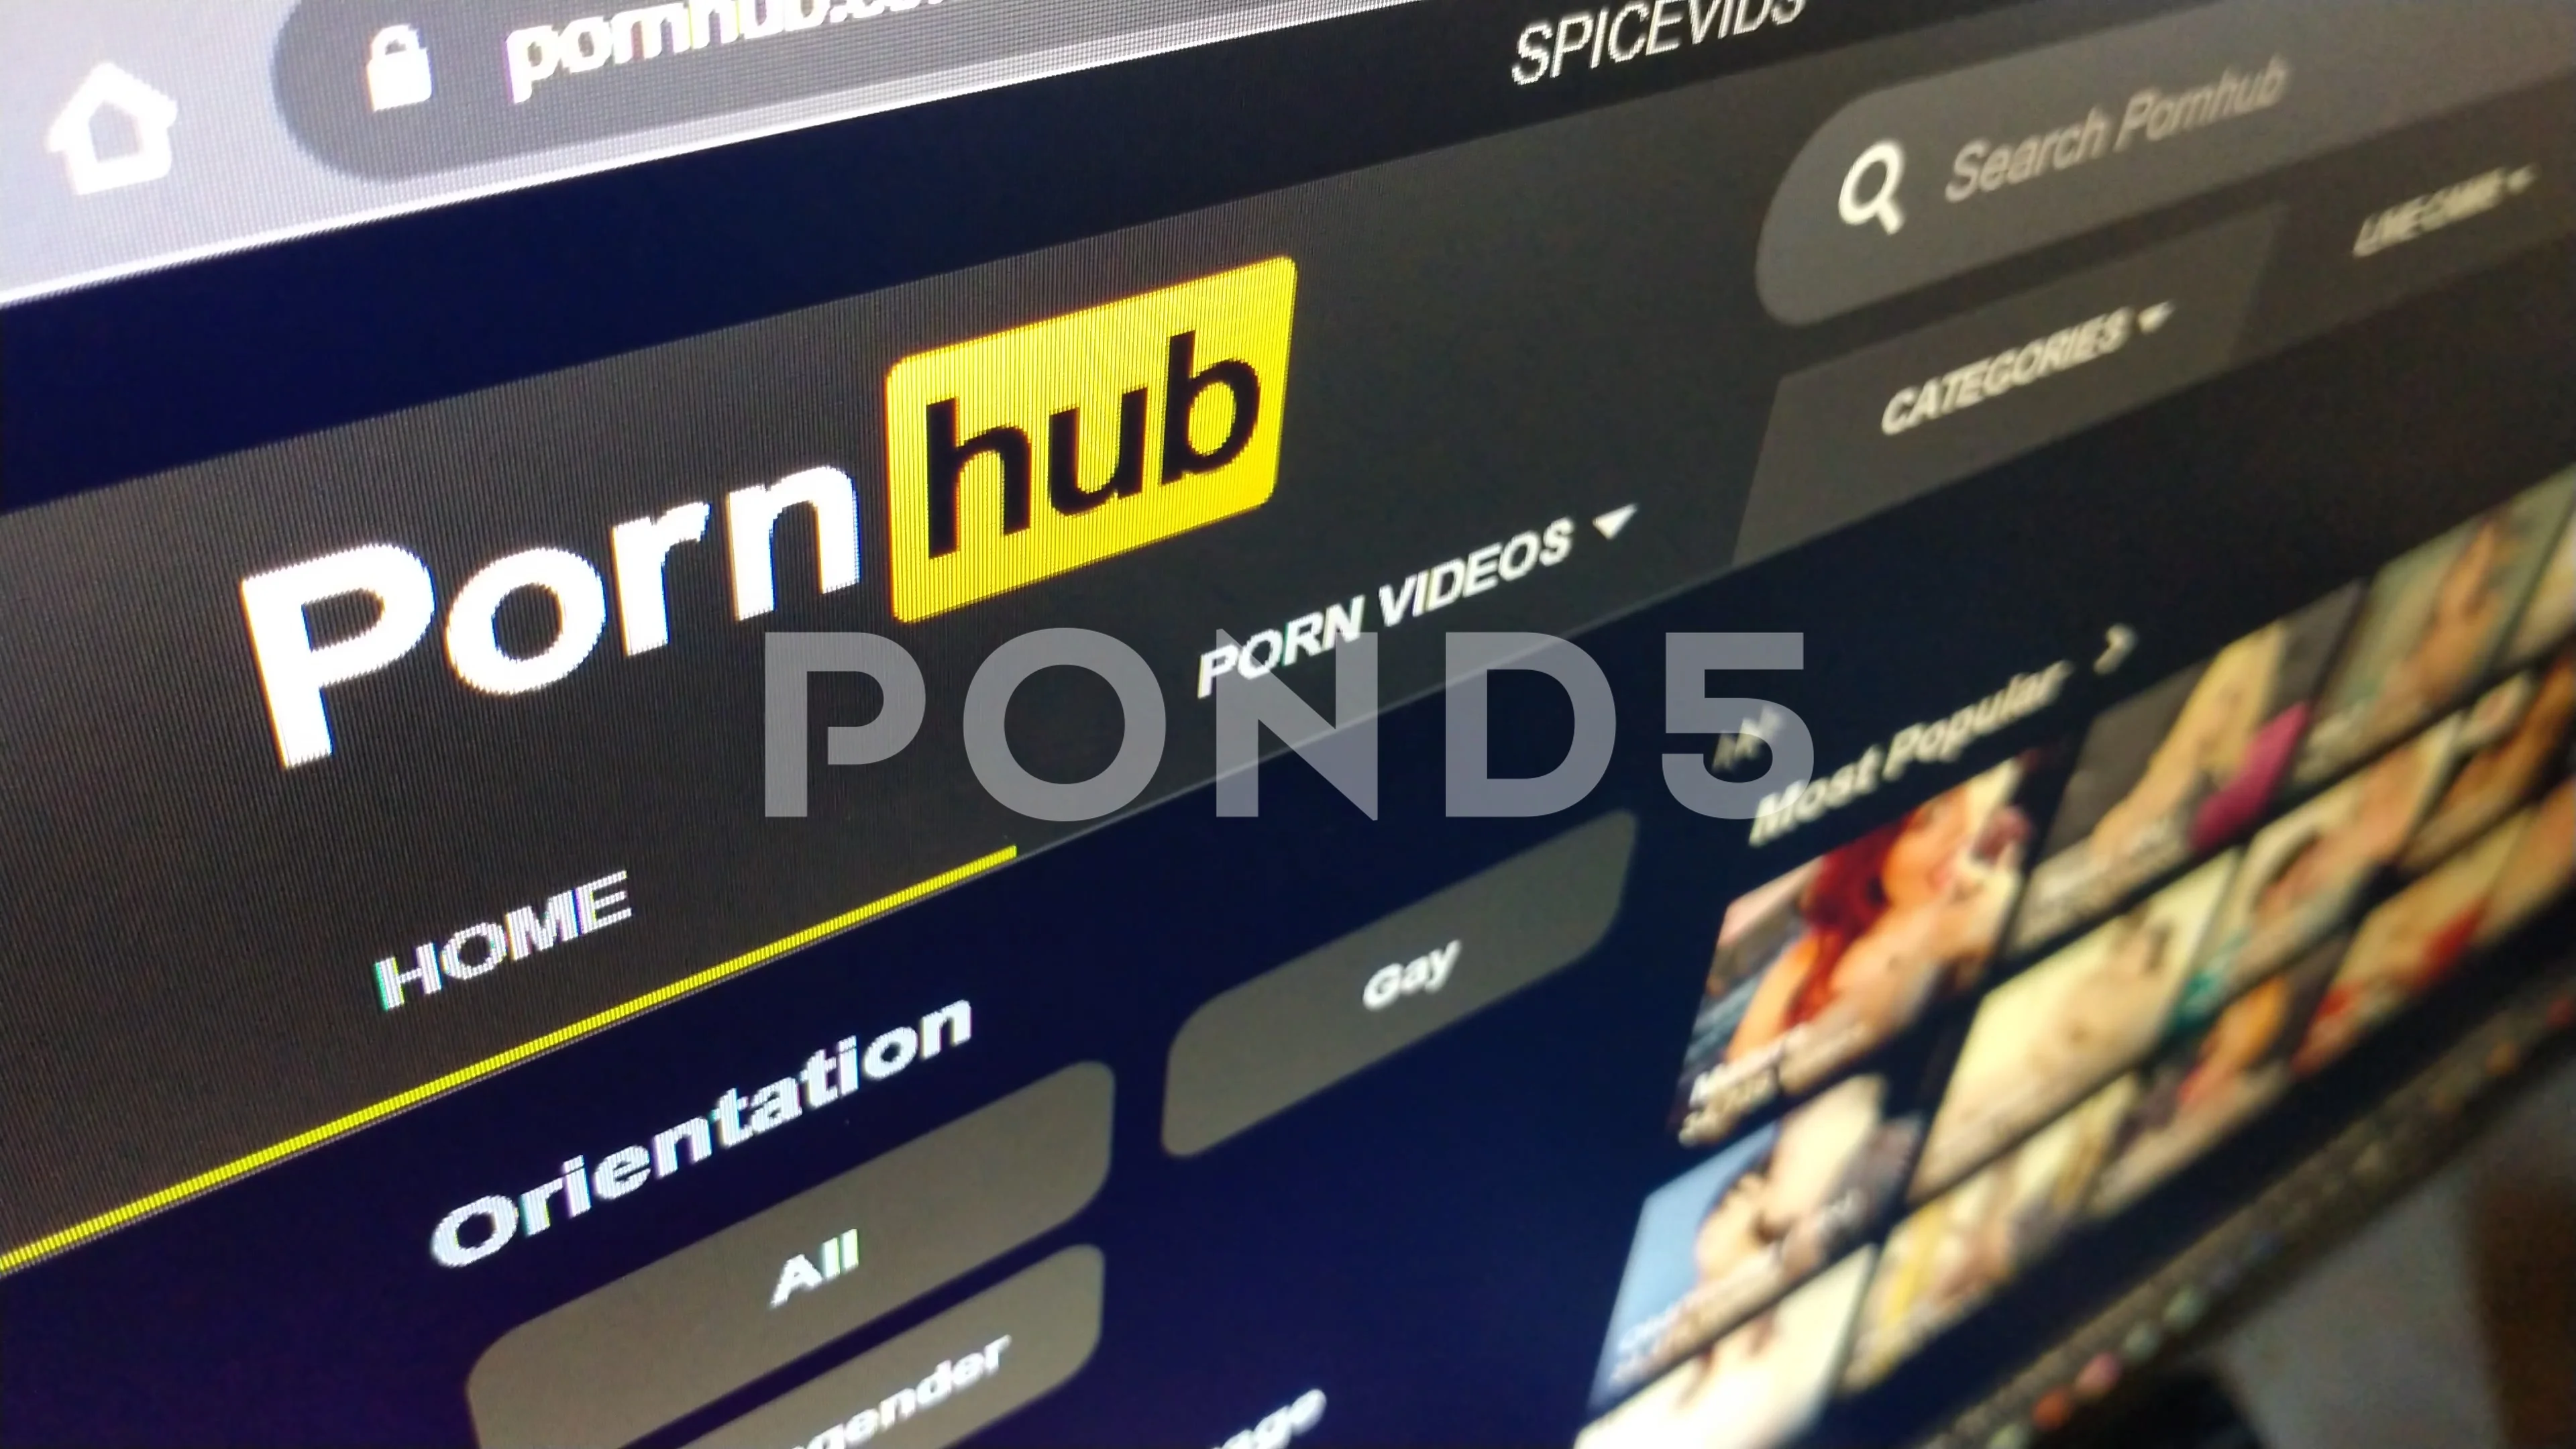 Xxx12yars Pron - porn hub erotic video platform. pornhub ... | Stock Video | Pond5